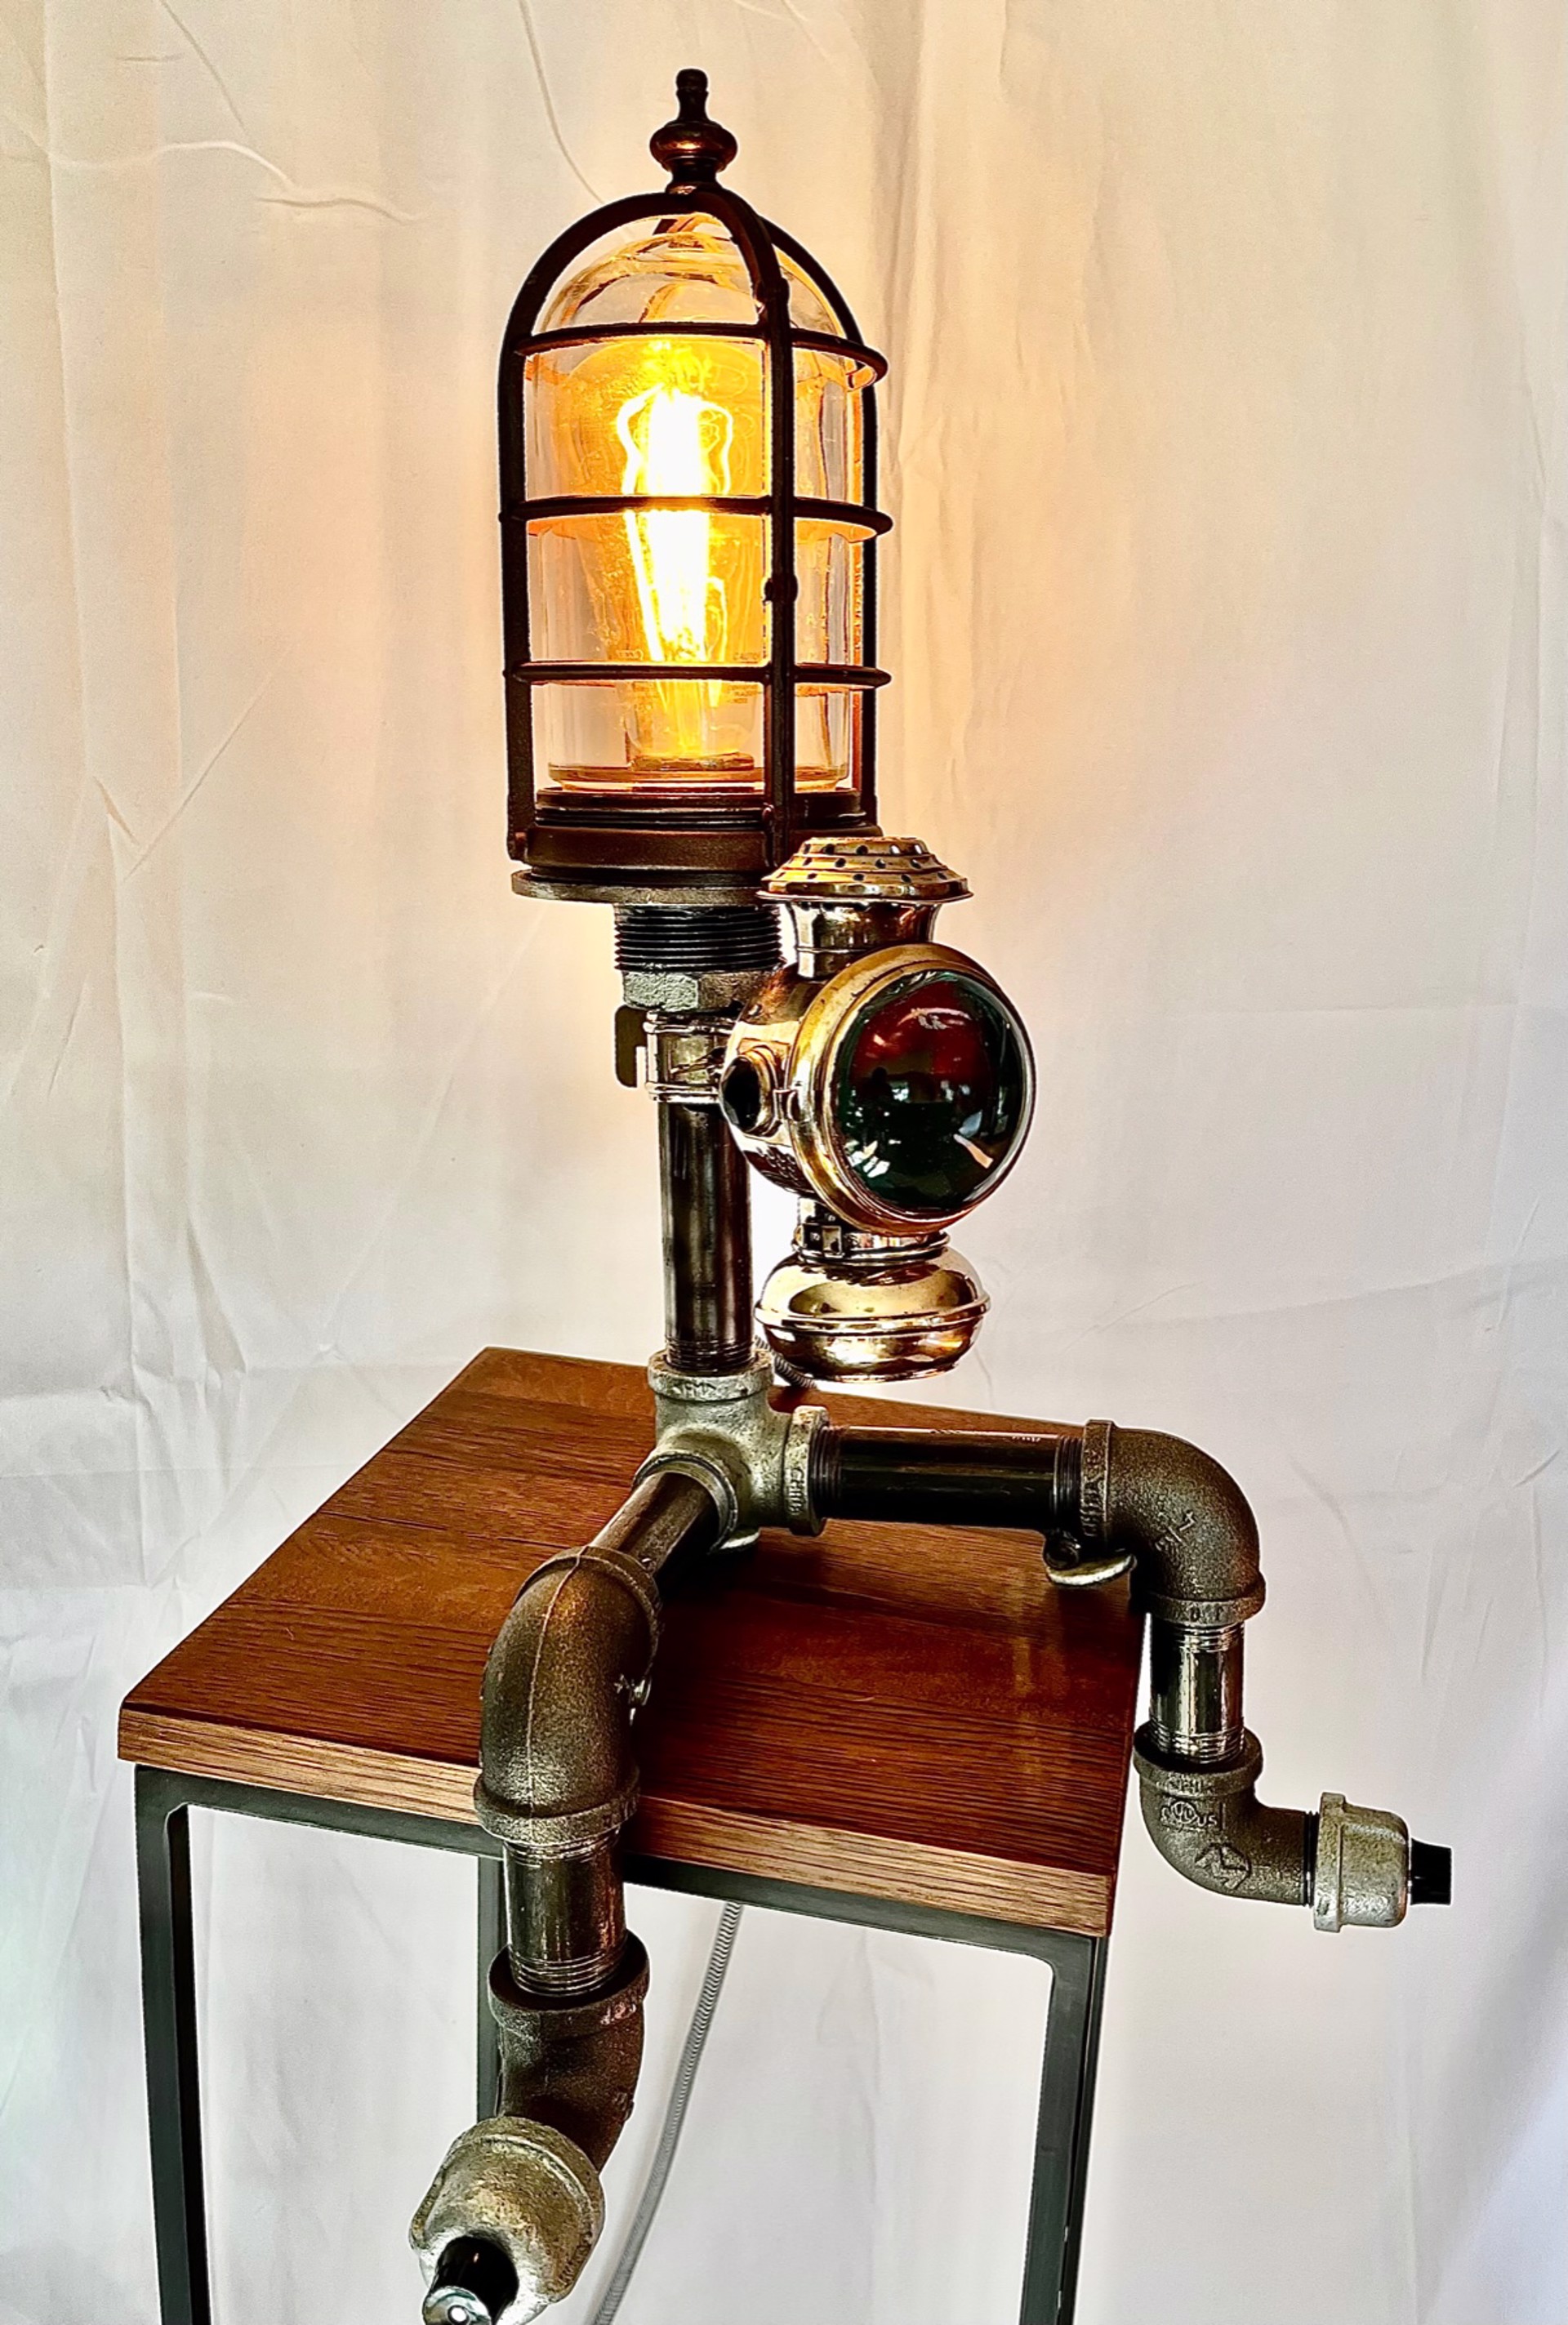 Martian Lamp Holder #16 by Robert Hilton